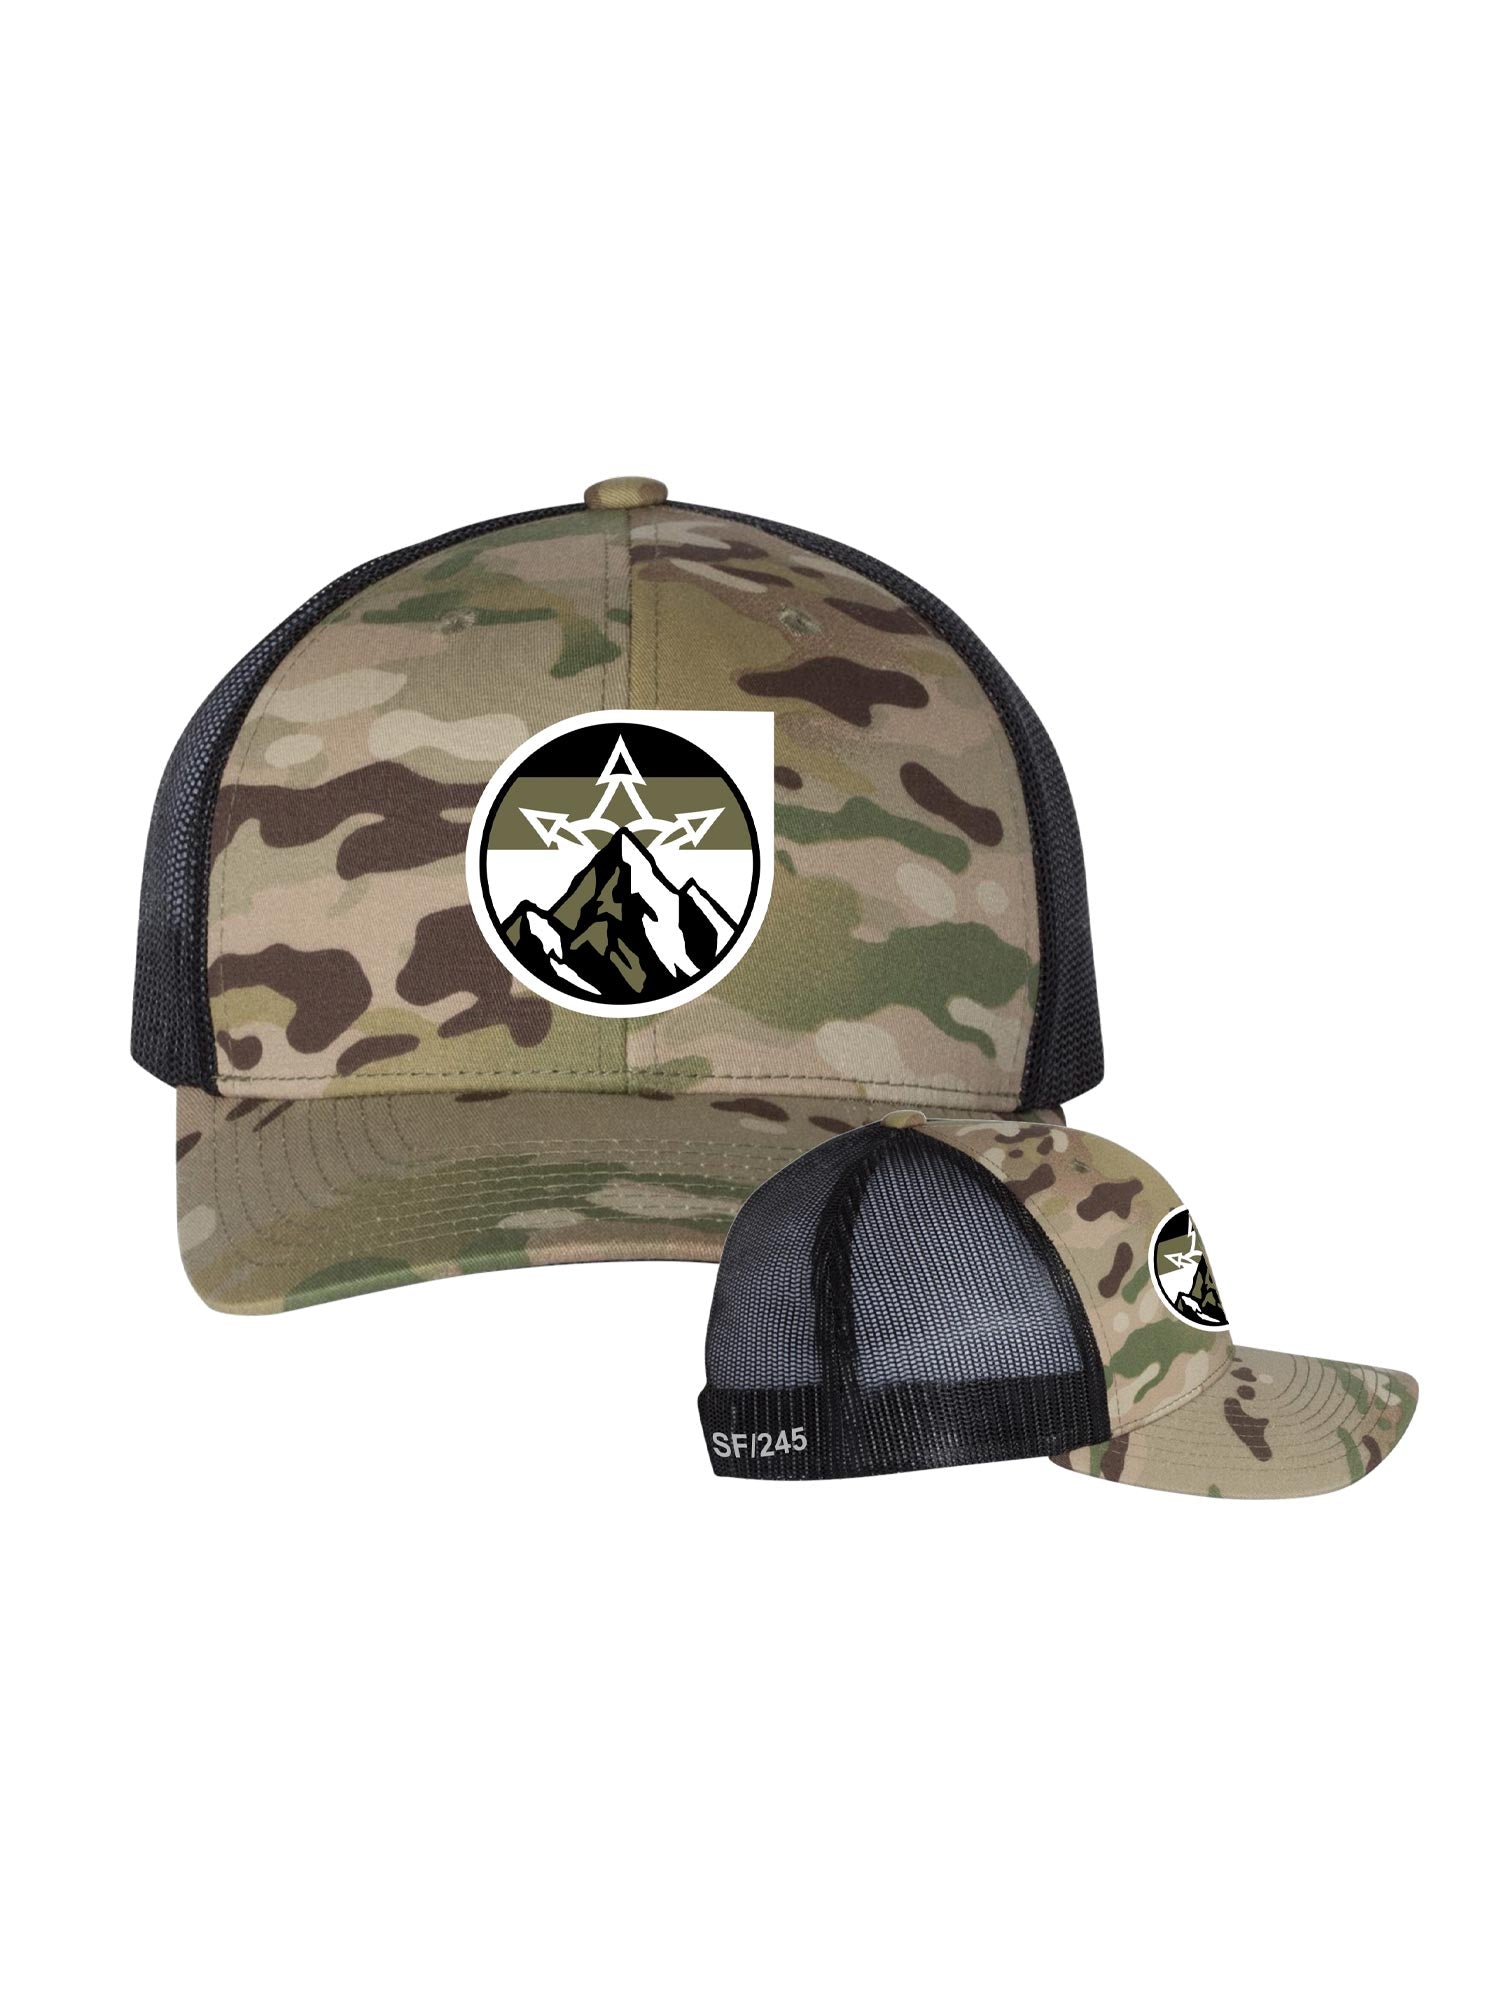 Snowflake Mountain logo hat, camo front black back